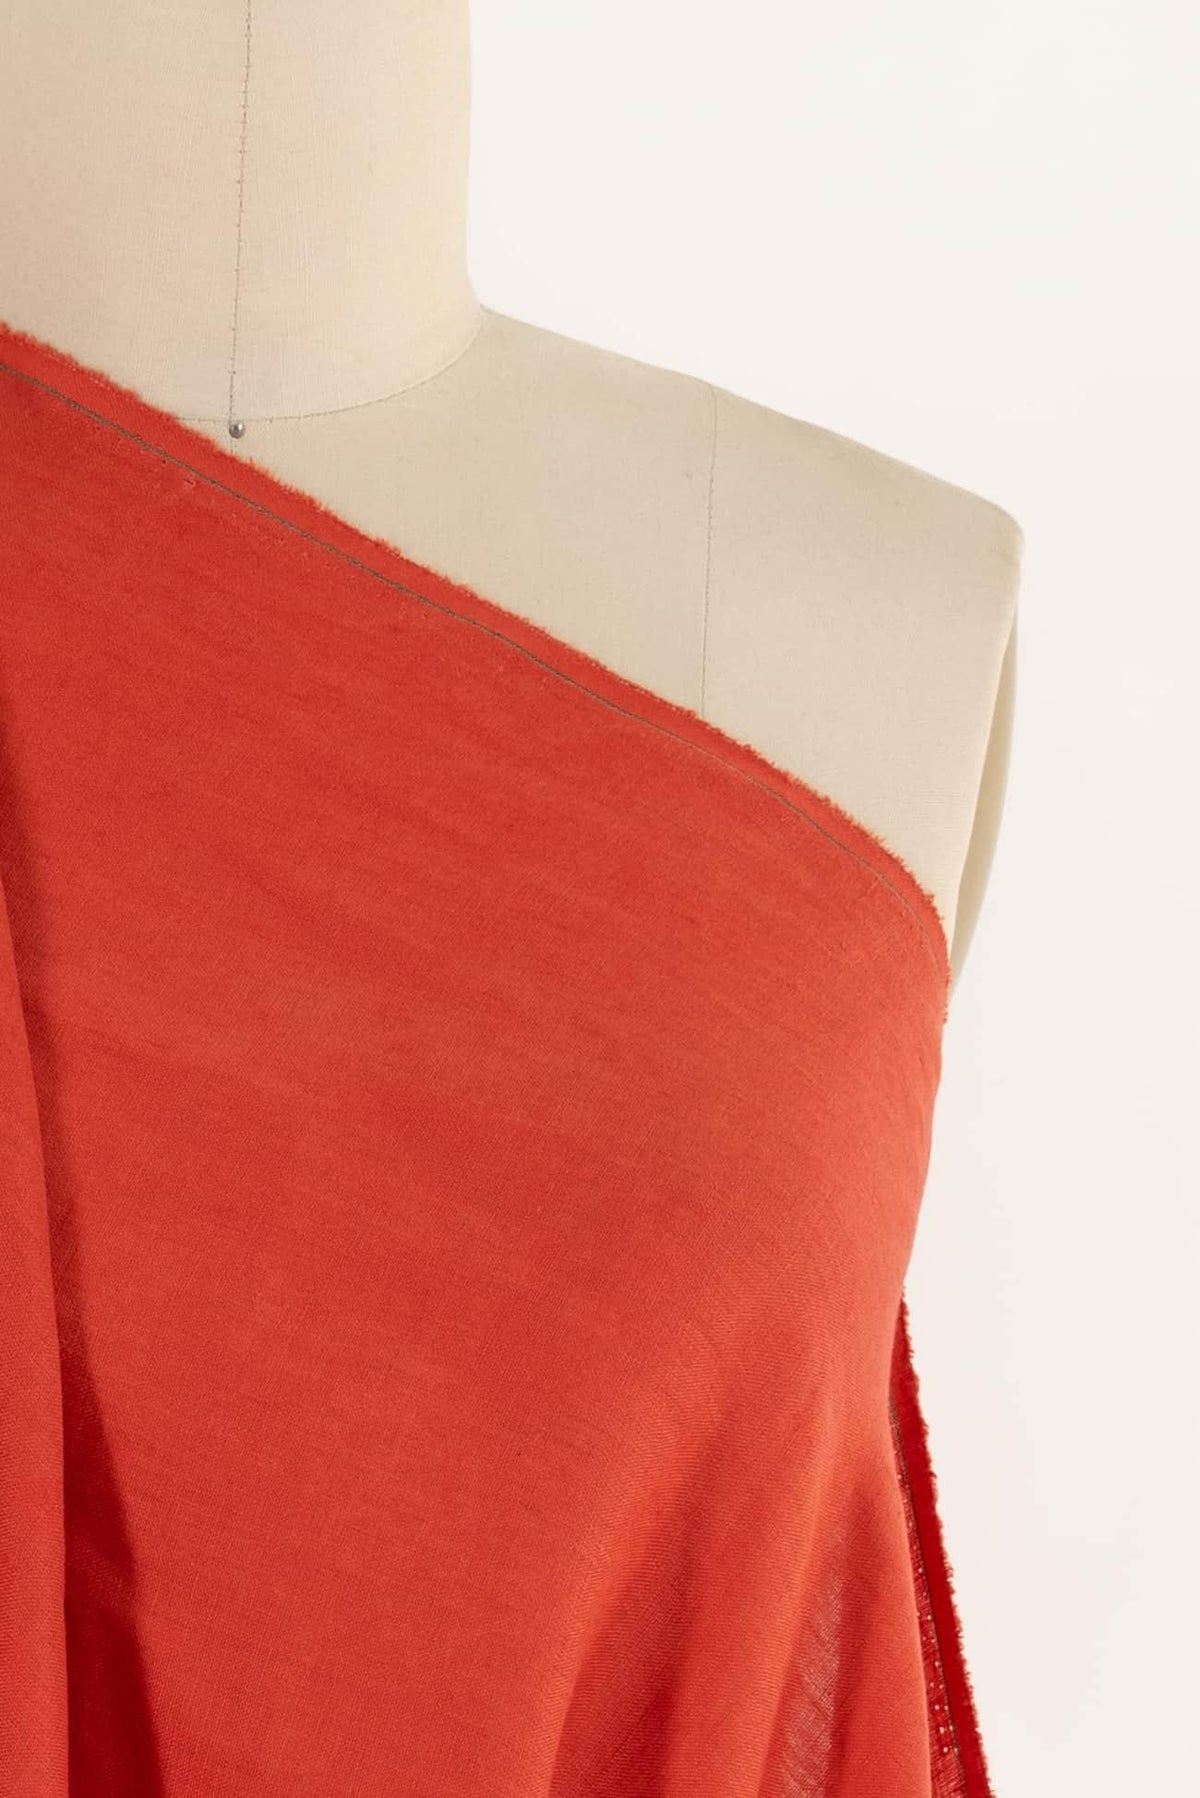 Coral Belle Linen Woven - Marcy Tilton Fabrics